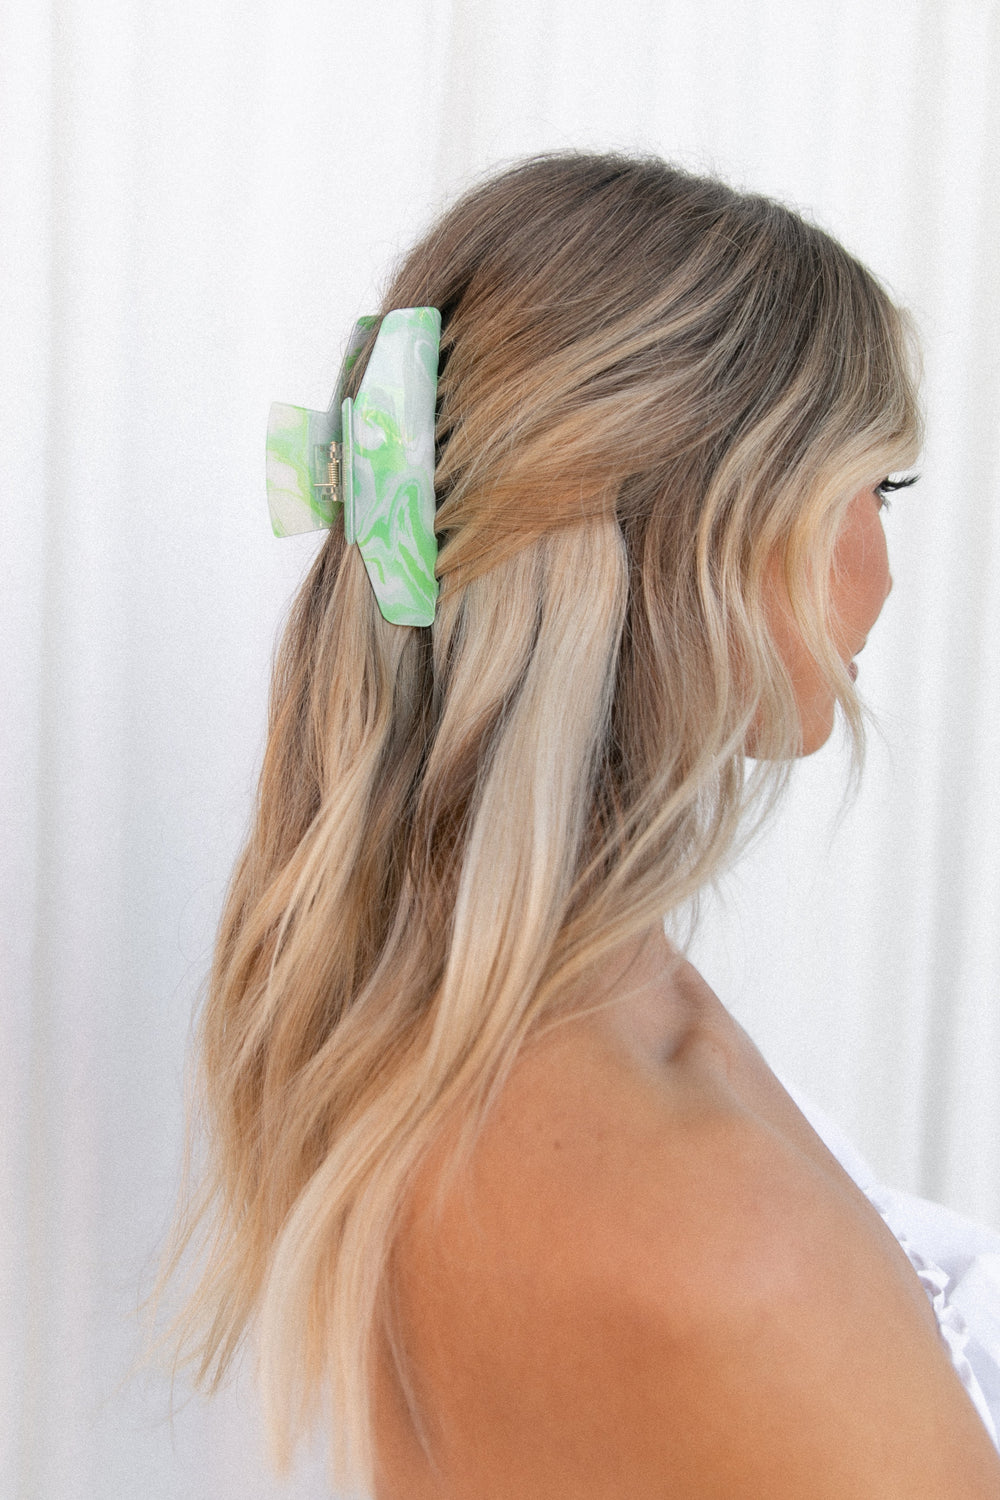 ACCESSORIES @Allie Hairclip - Green Swirl